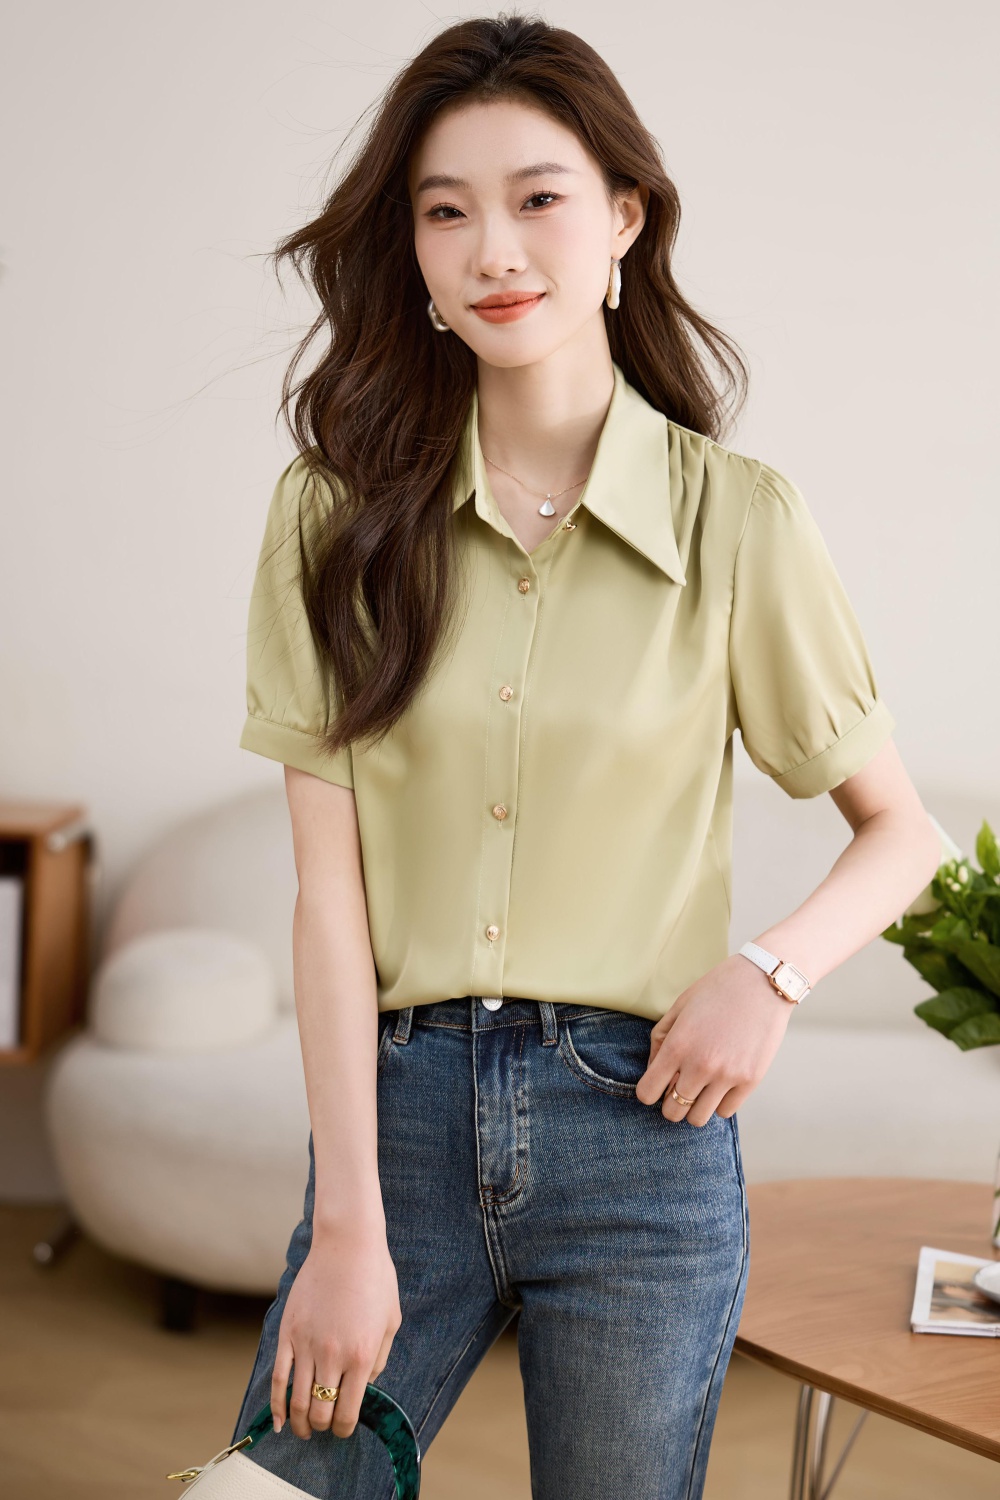 Thin summer shirt Korean style tops for women